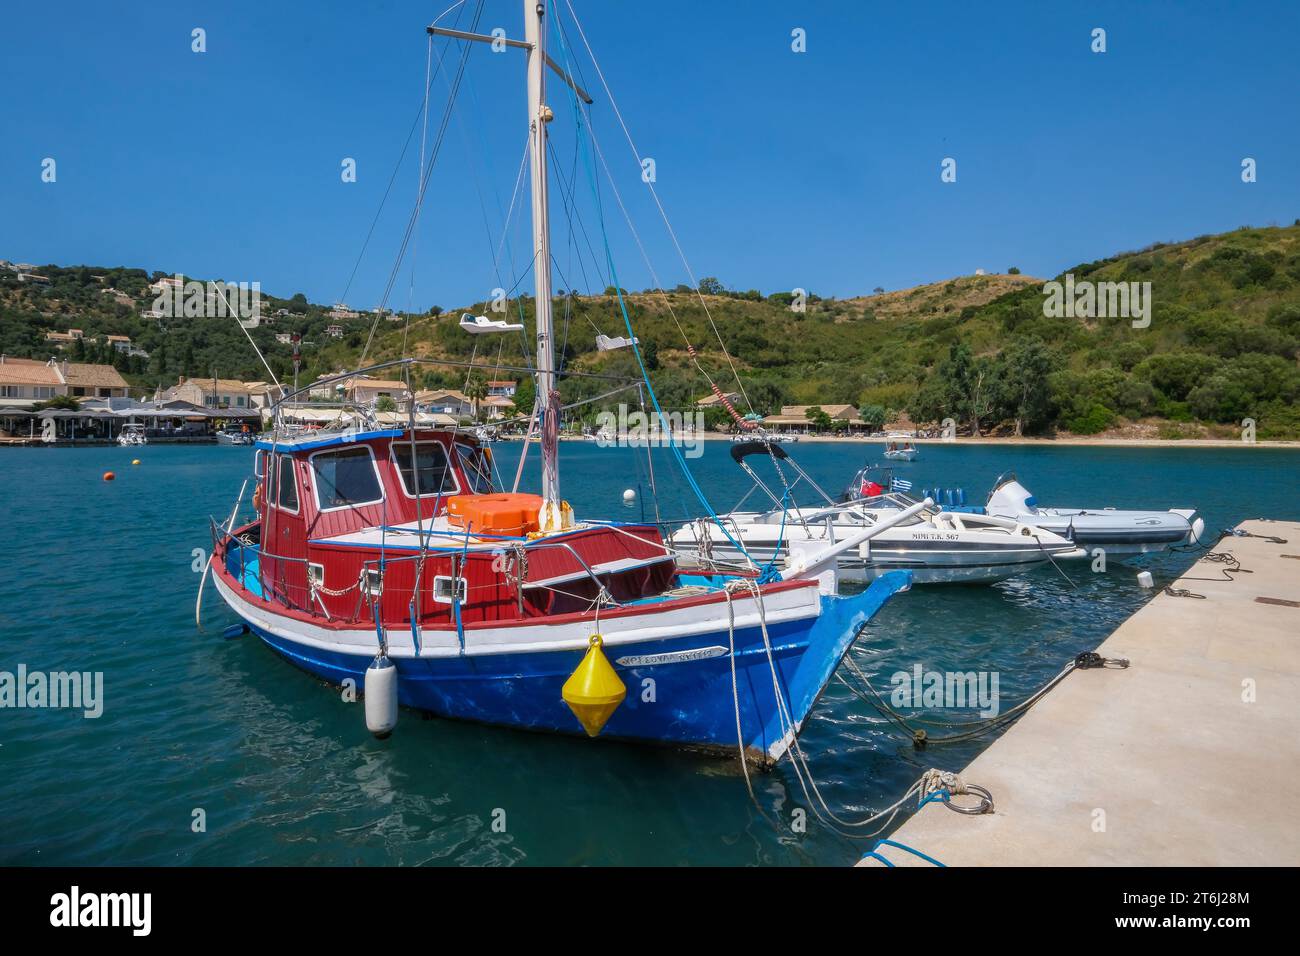 Agios Stefanos Avliotes, Corfu, Greece, fishing boats in the harbor of Agios Stefanos. Agios Stefanos was originally a fishing village for the nearby village of Avliotes on the northwest coast of the island of Corfu. Stock Photo